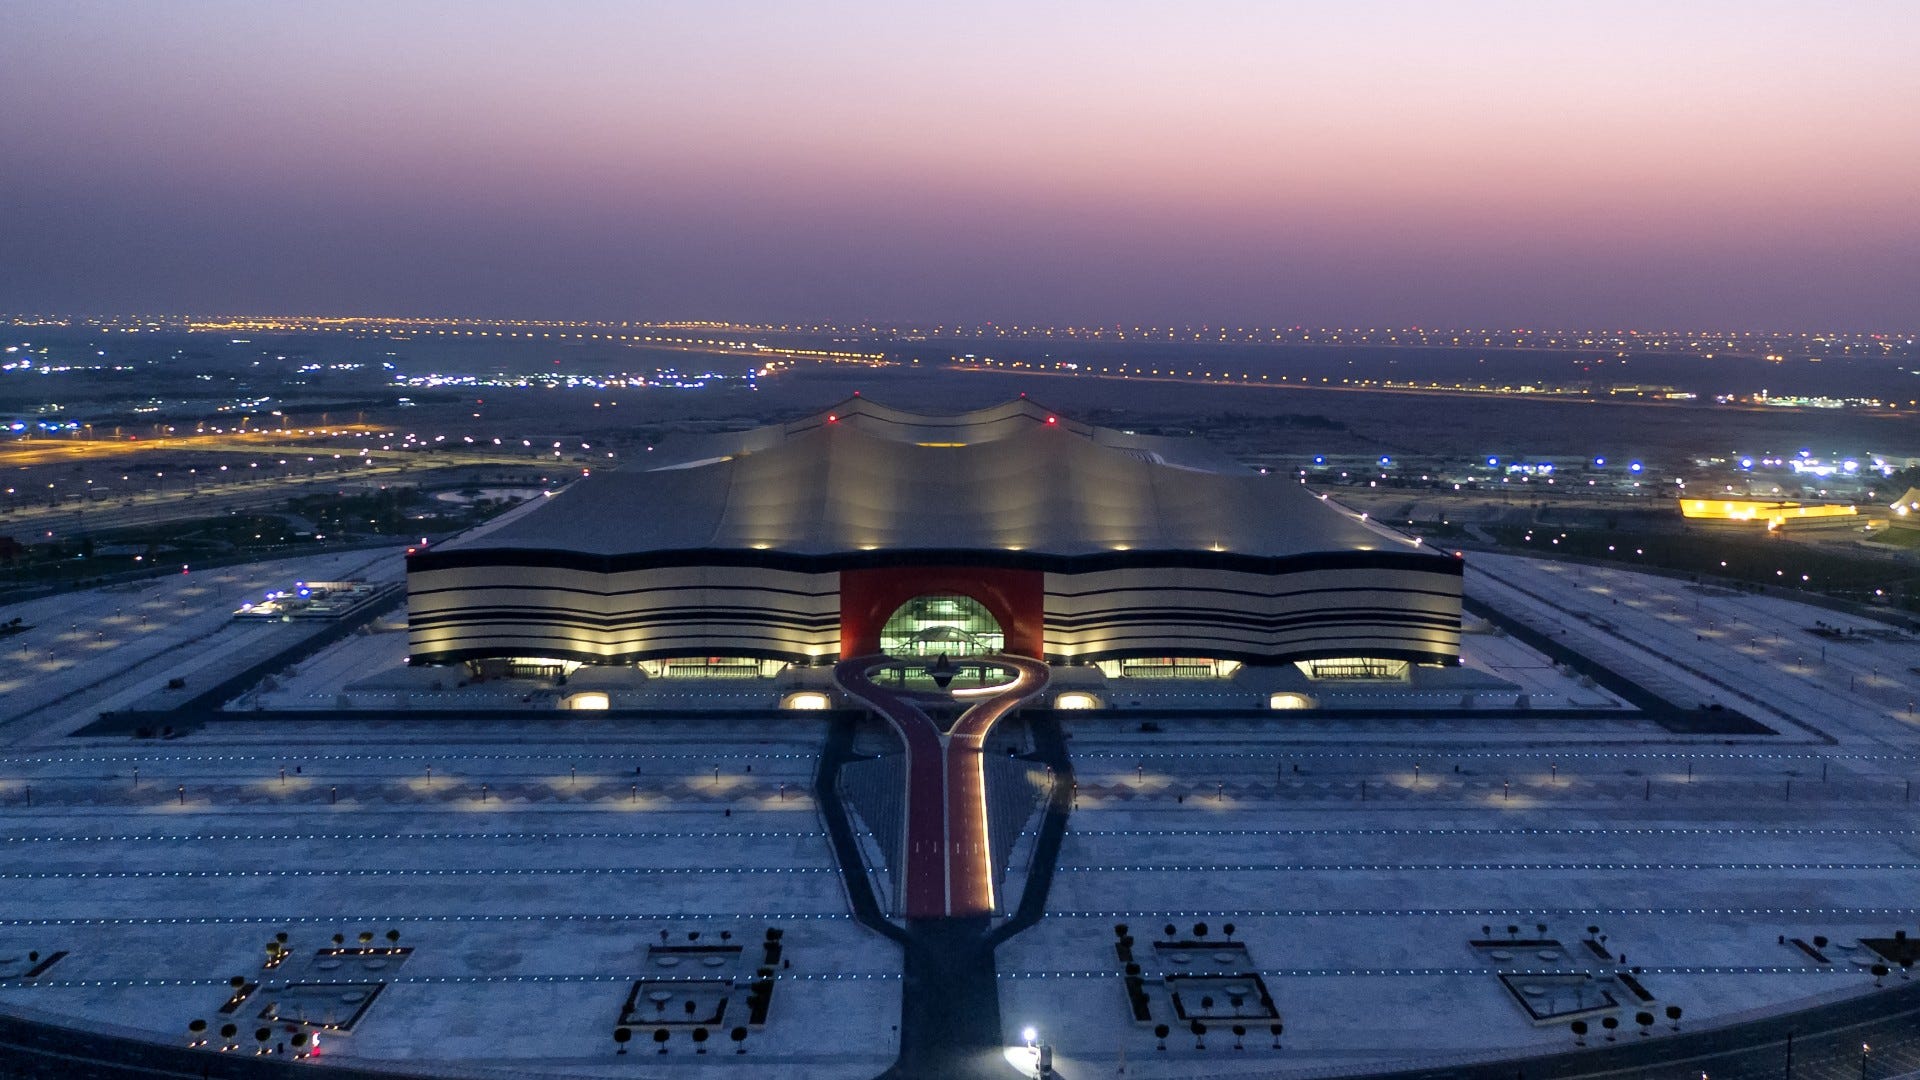 Al Bayt Stadium, Qatar